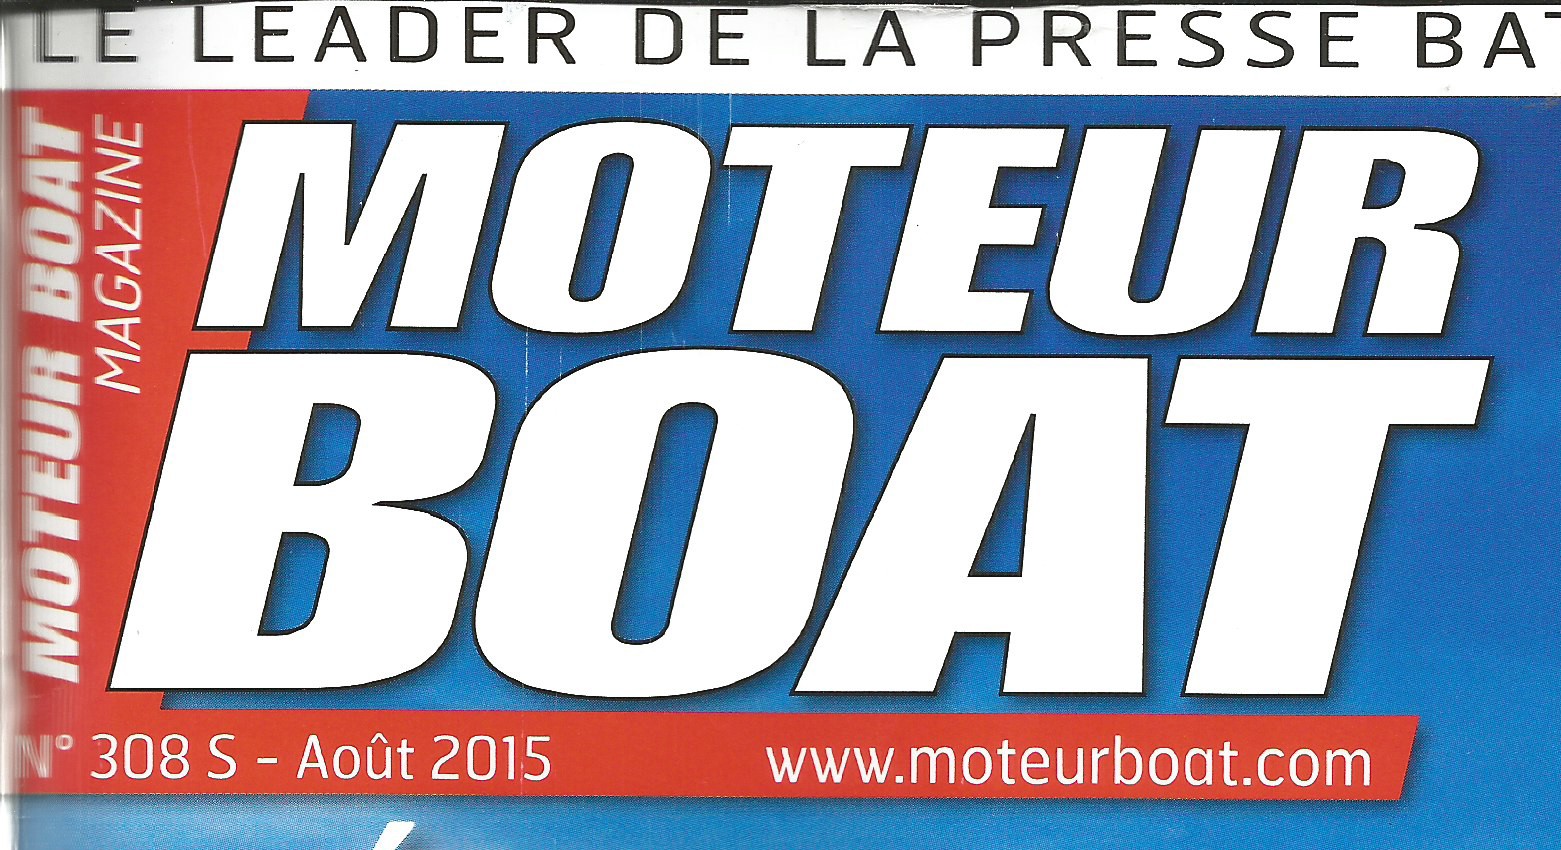 Moteur Boat magazine